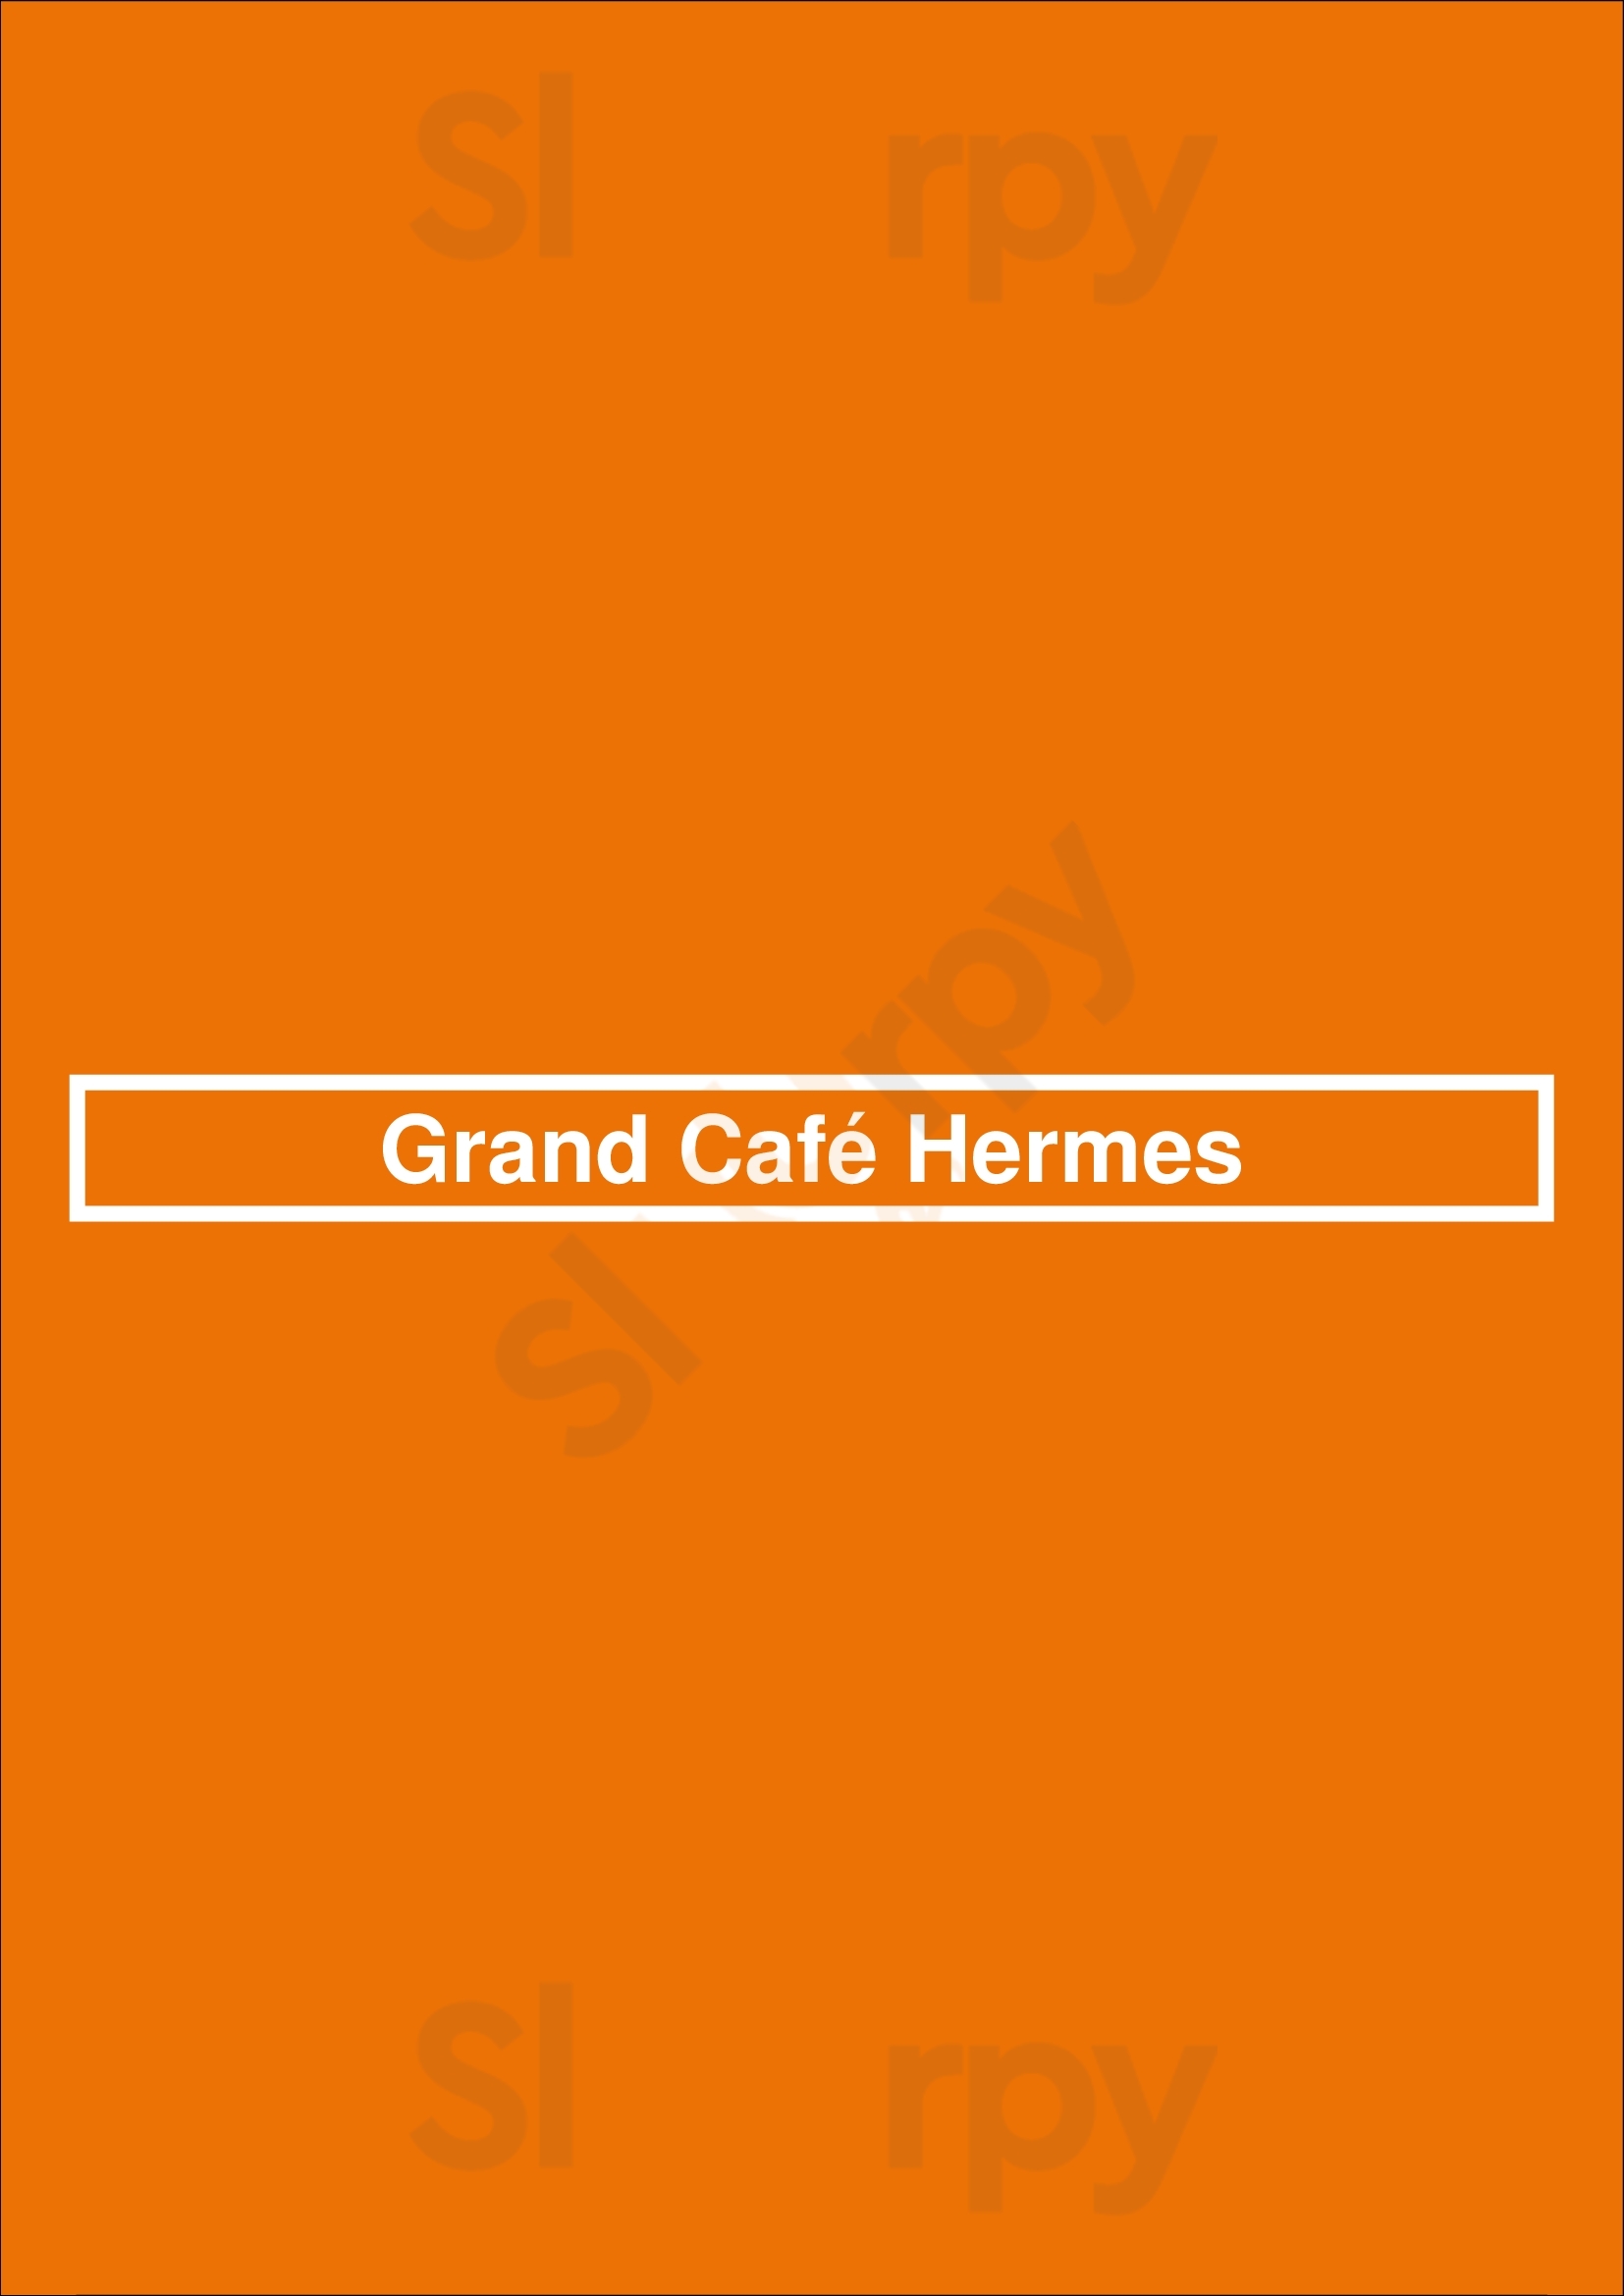 Grand Café Hermes Amsterdam Menu - 1